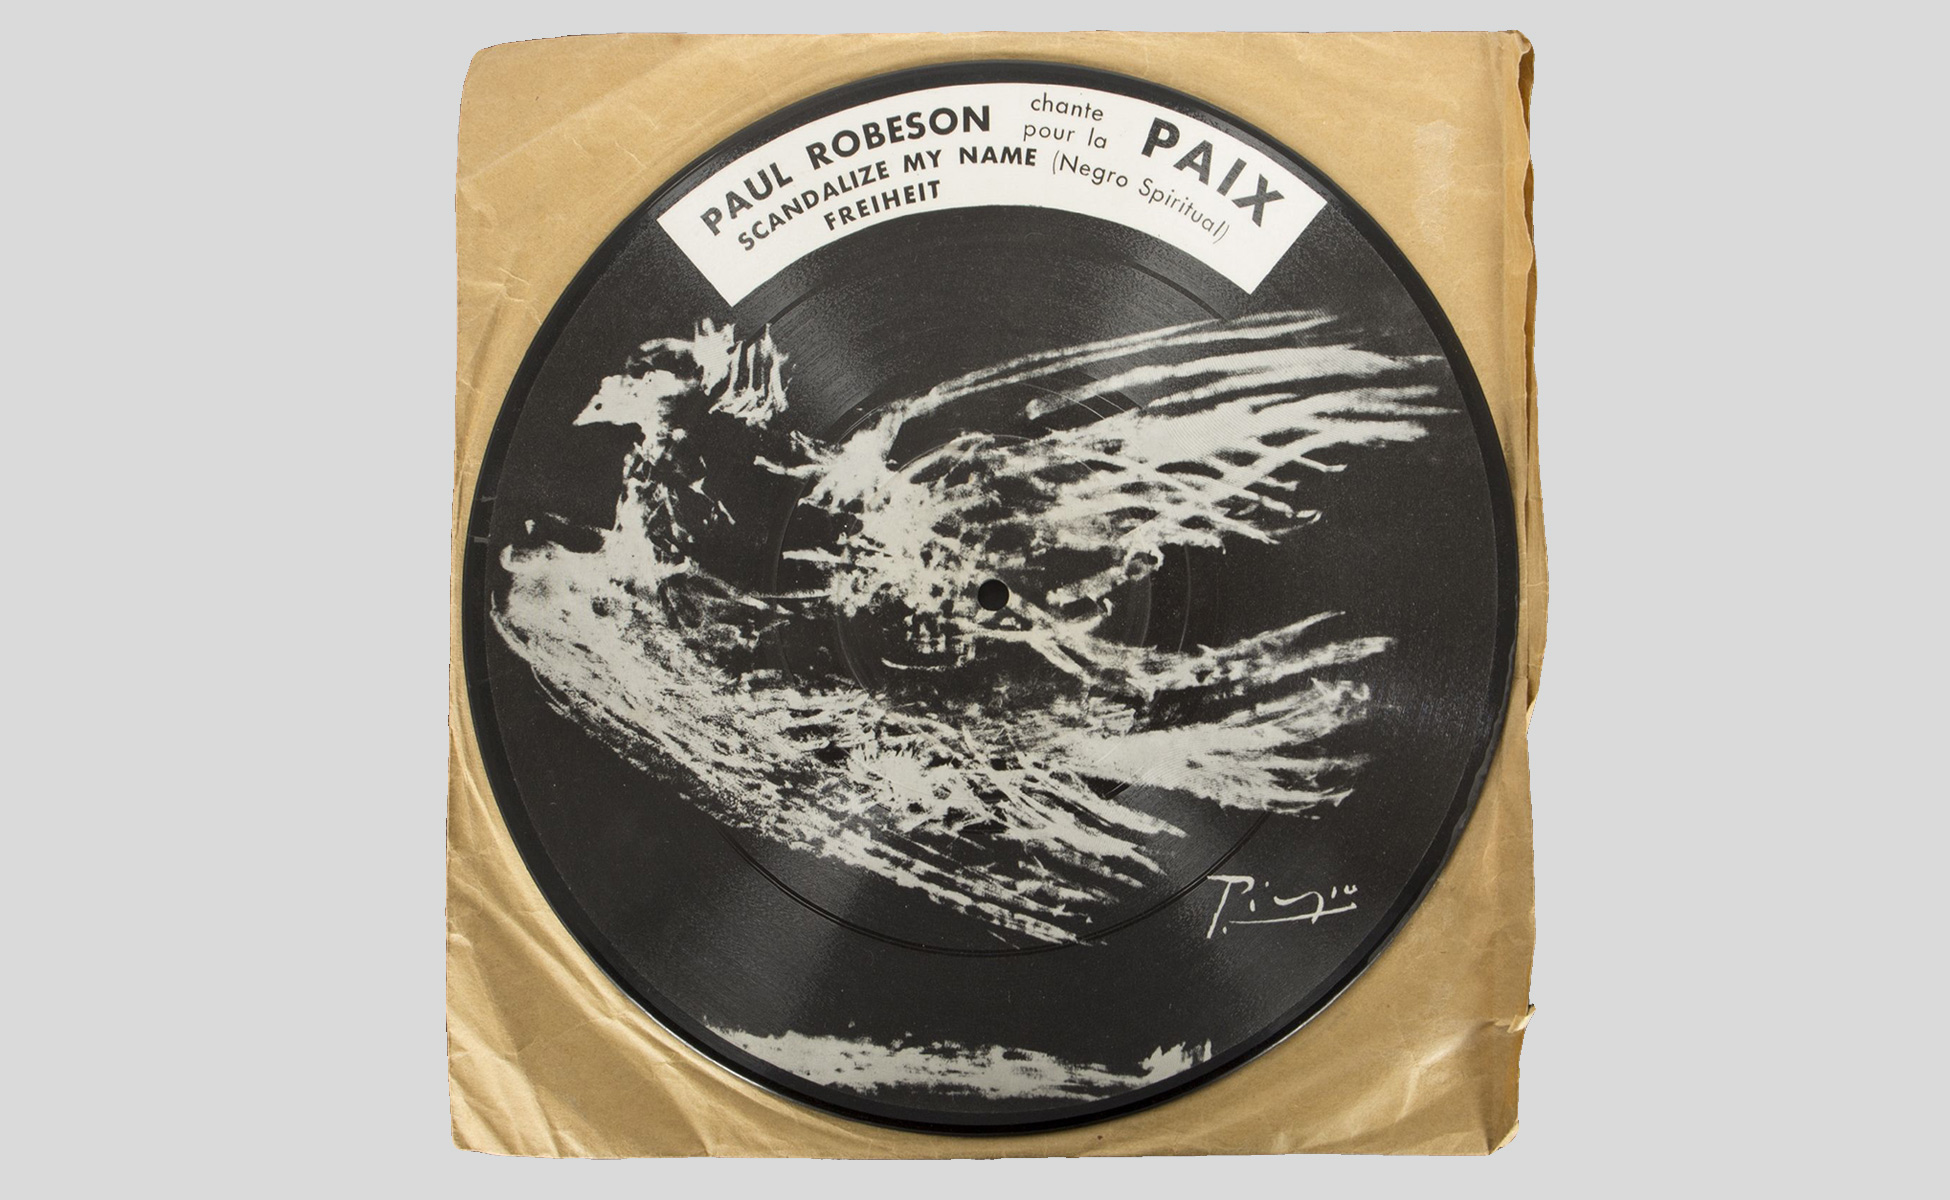 picasso-paix-vinyle-paul-robeson-1949